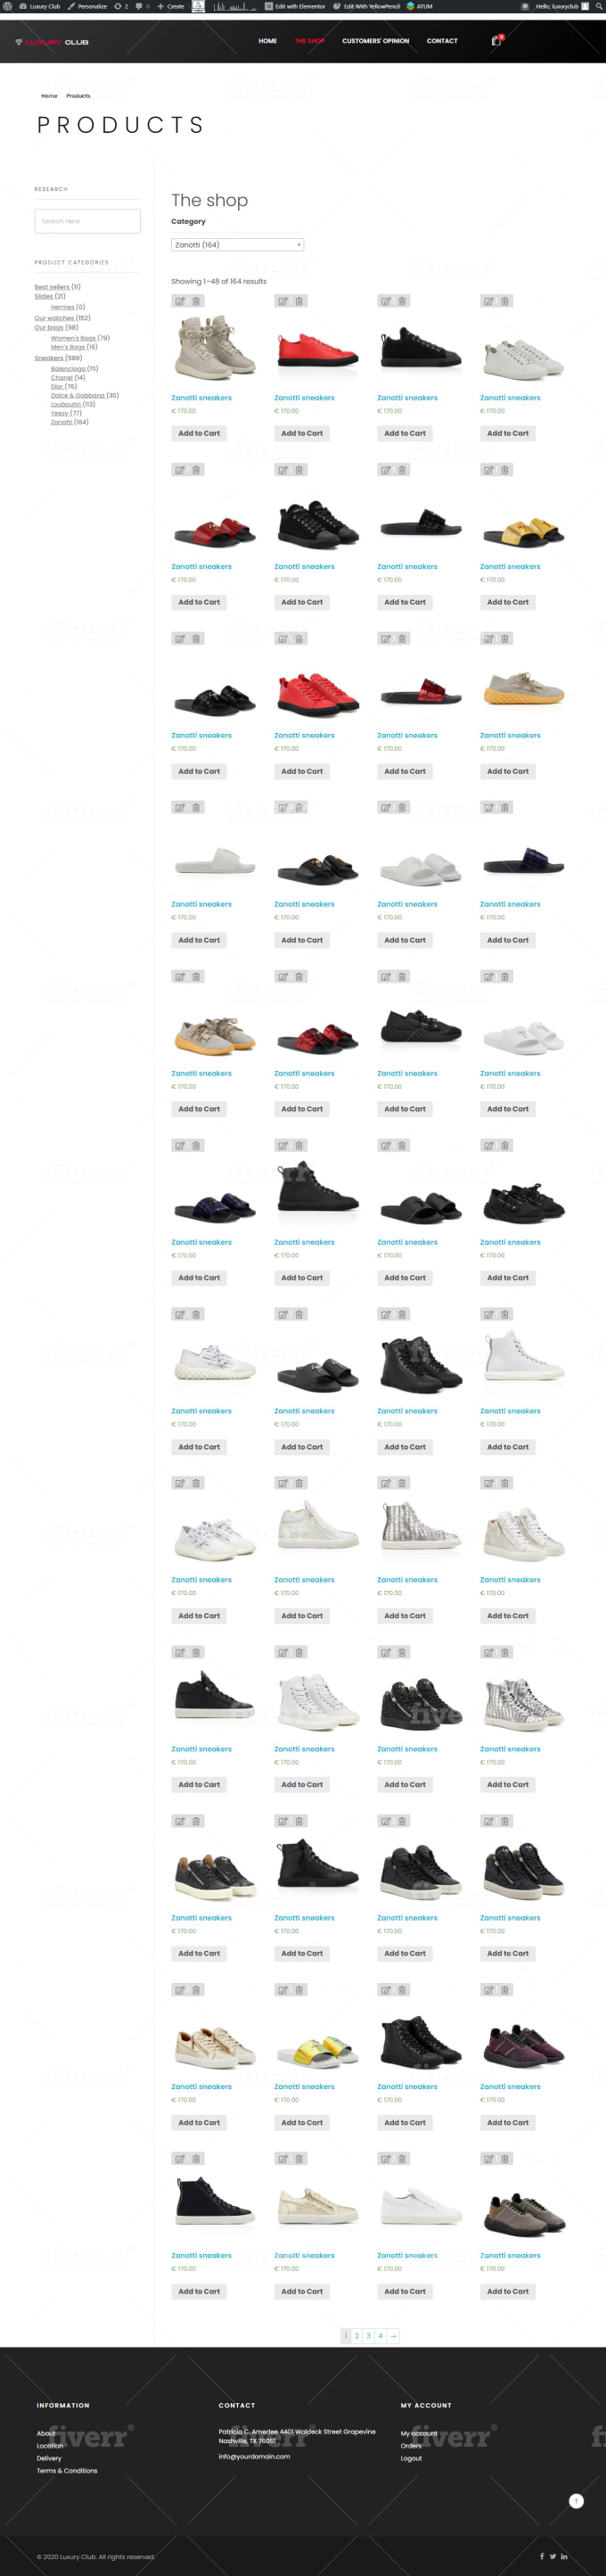 chans sneakers website